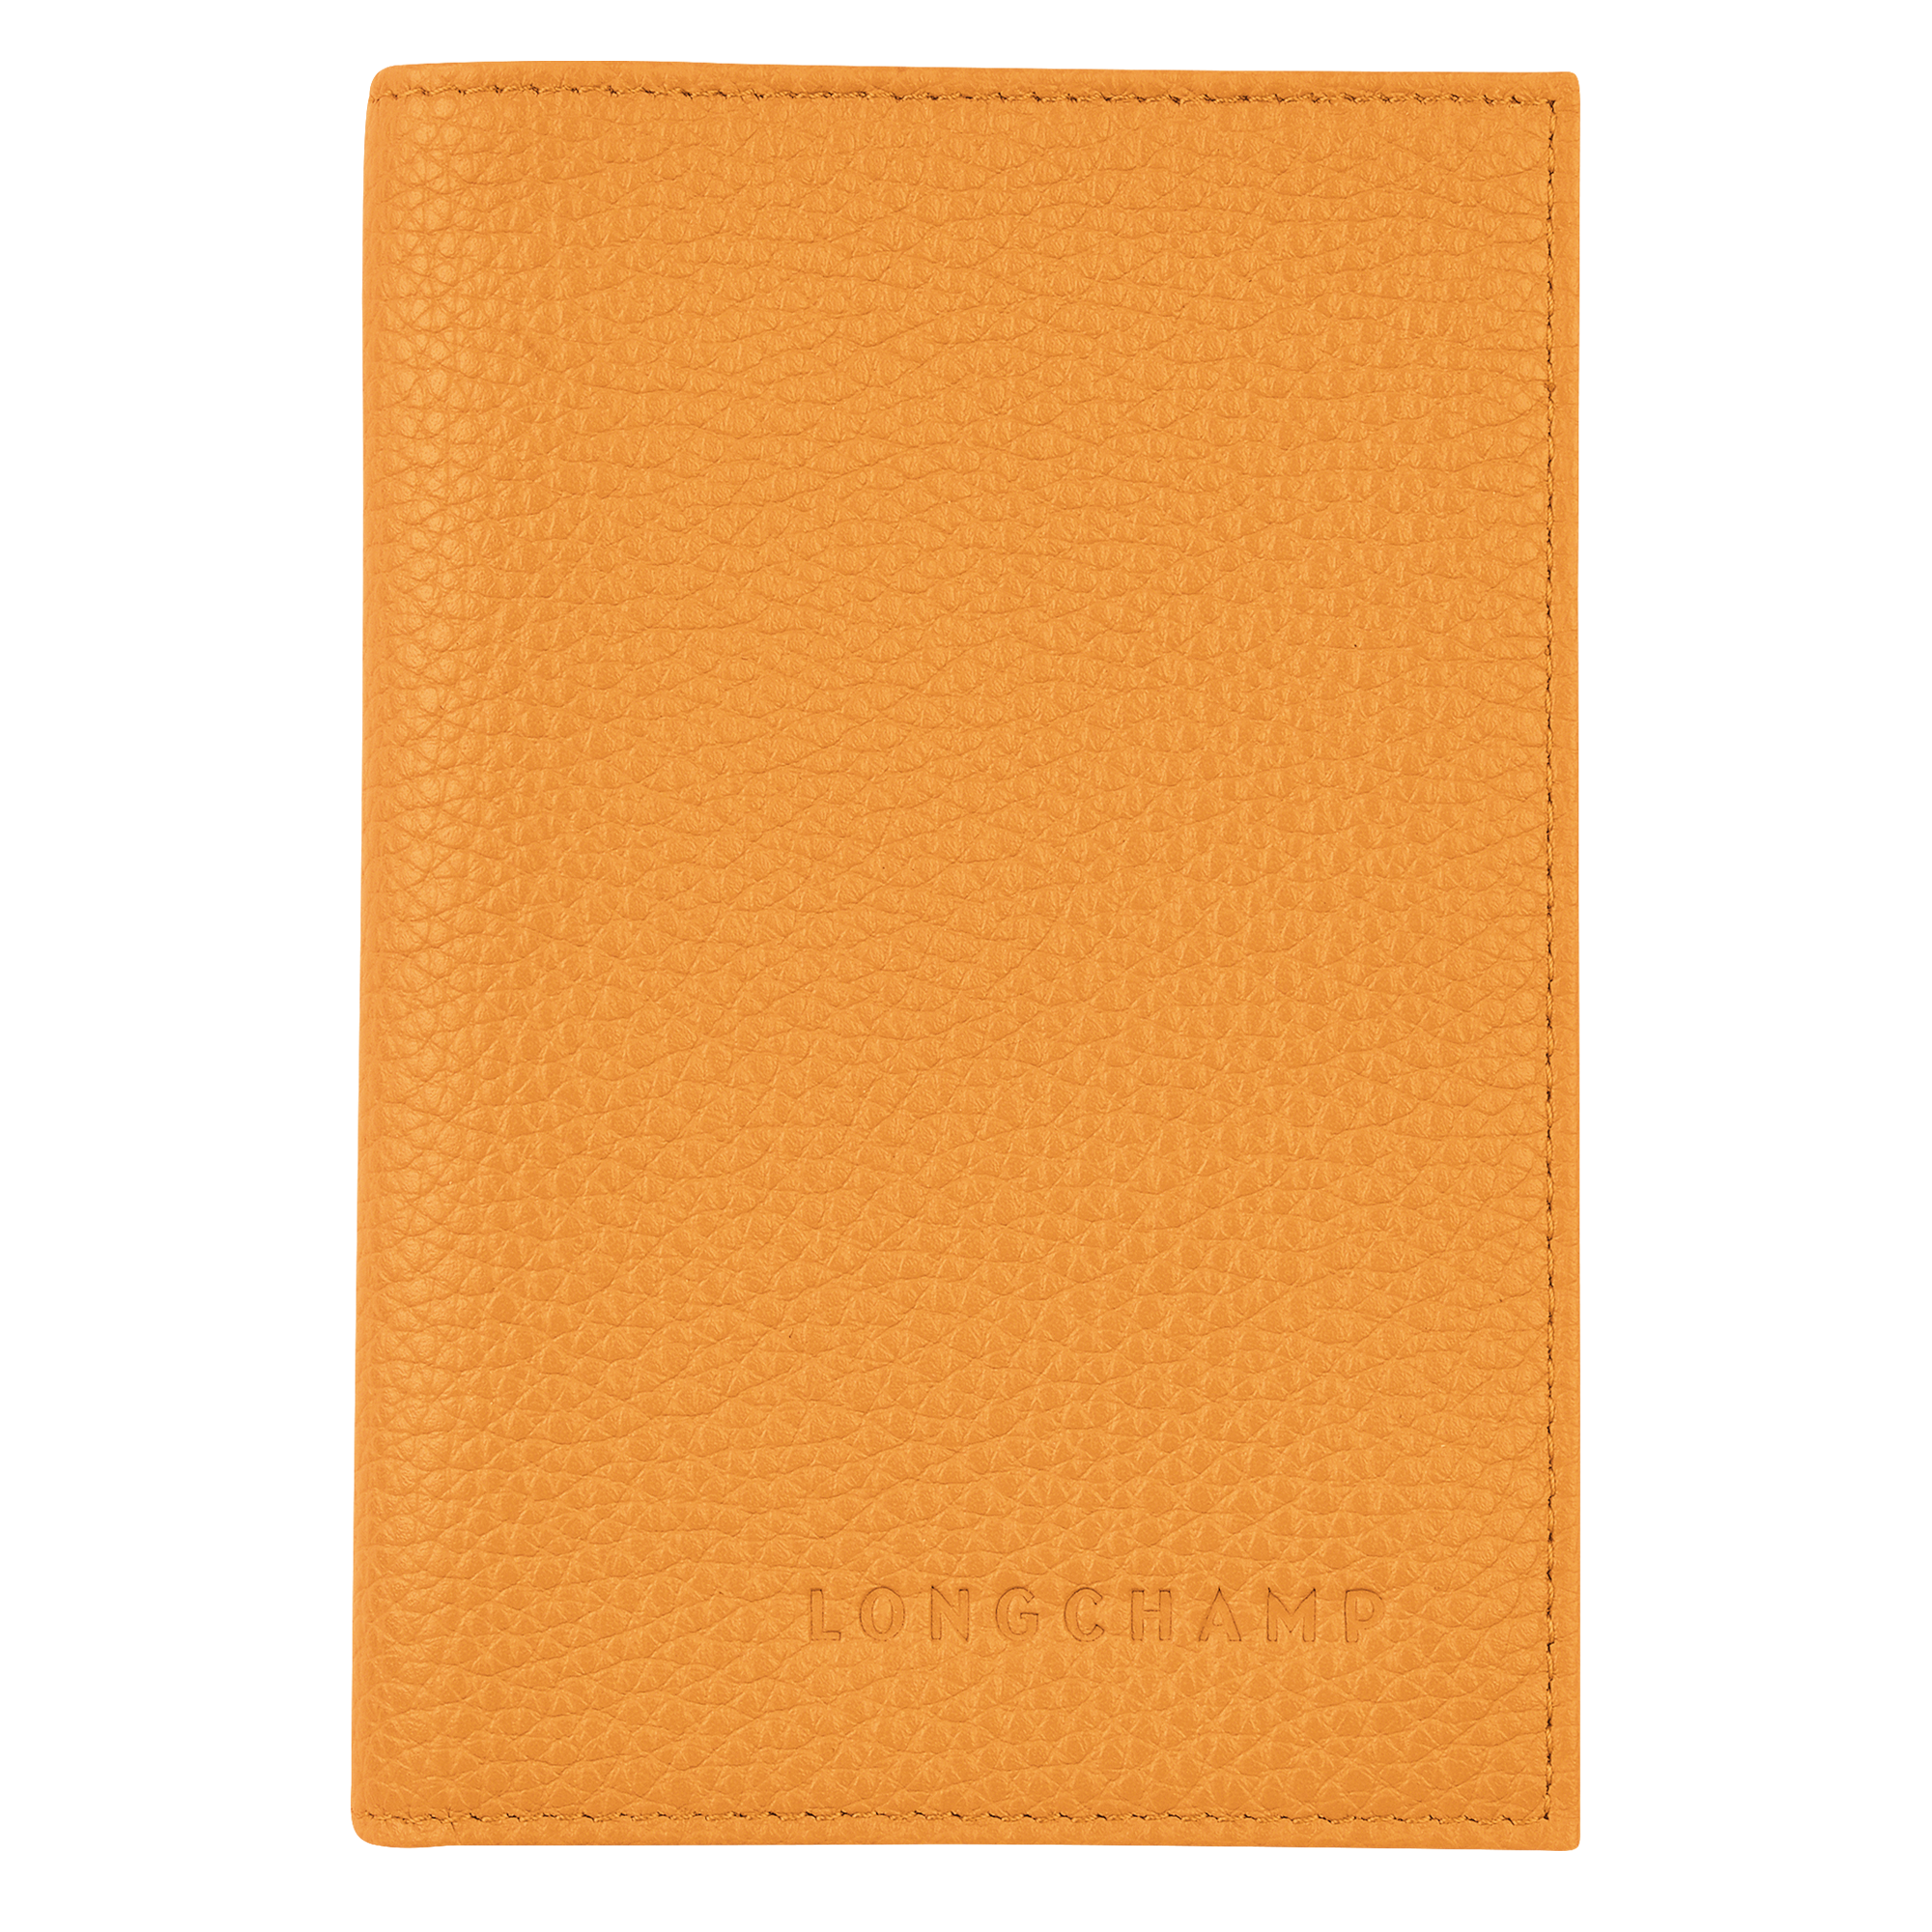 Le Foulonné 系列 護照夾, 杏色